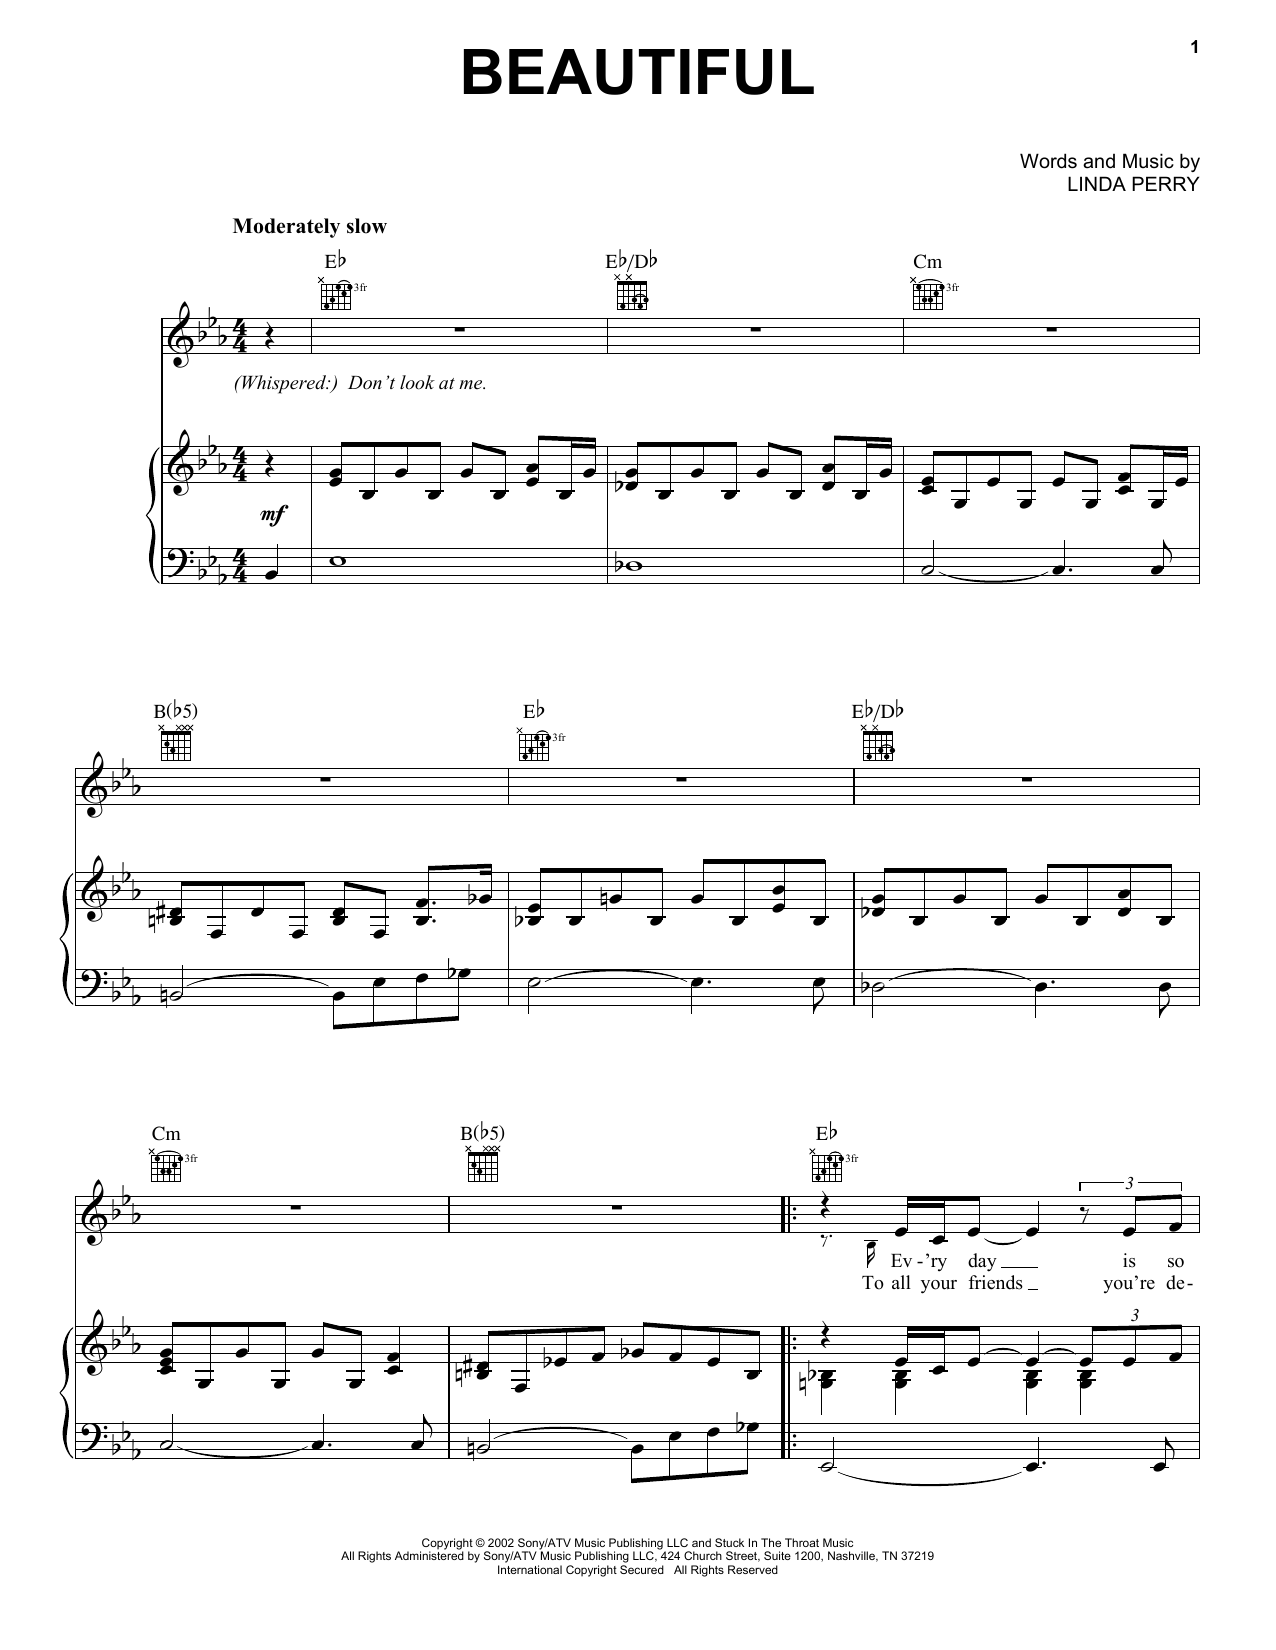 Christina Aguilera Beautiful Sheet Music Notes & Chords for Clarinet - Download or Print PDF